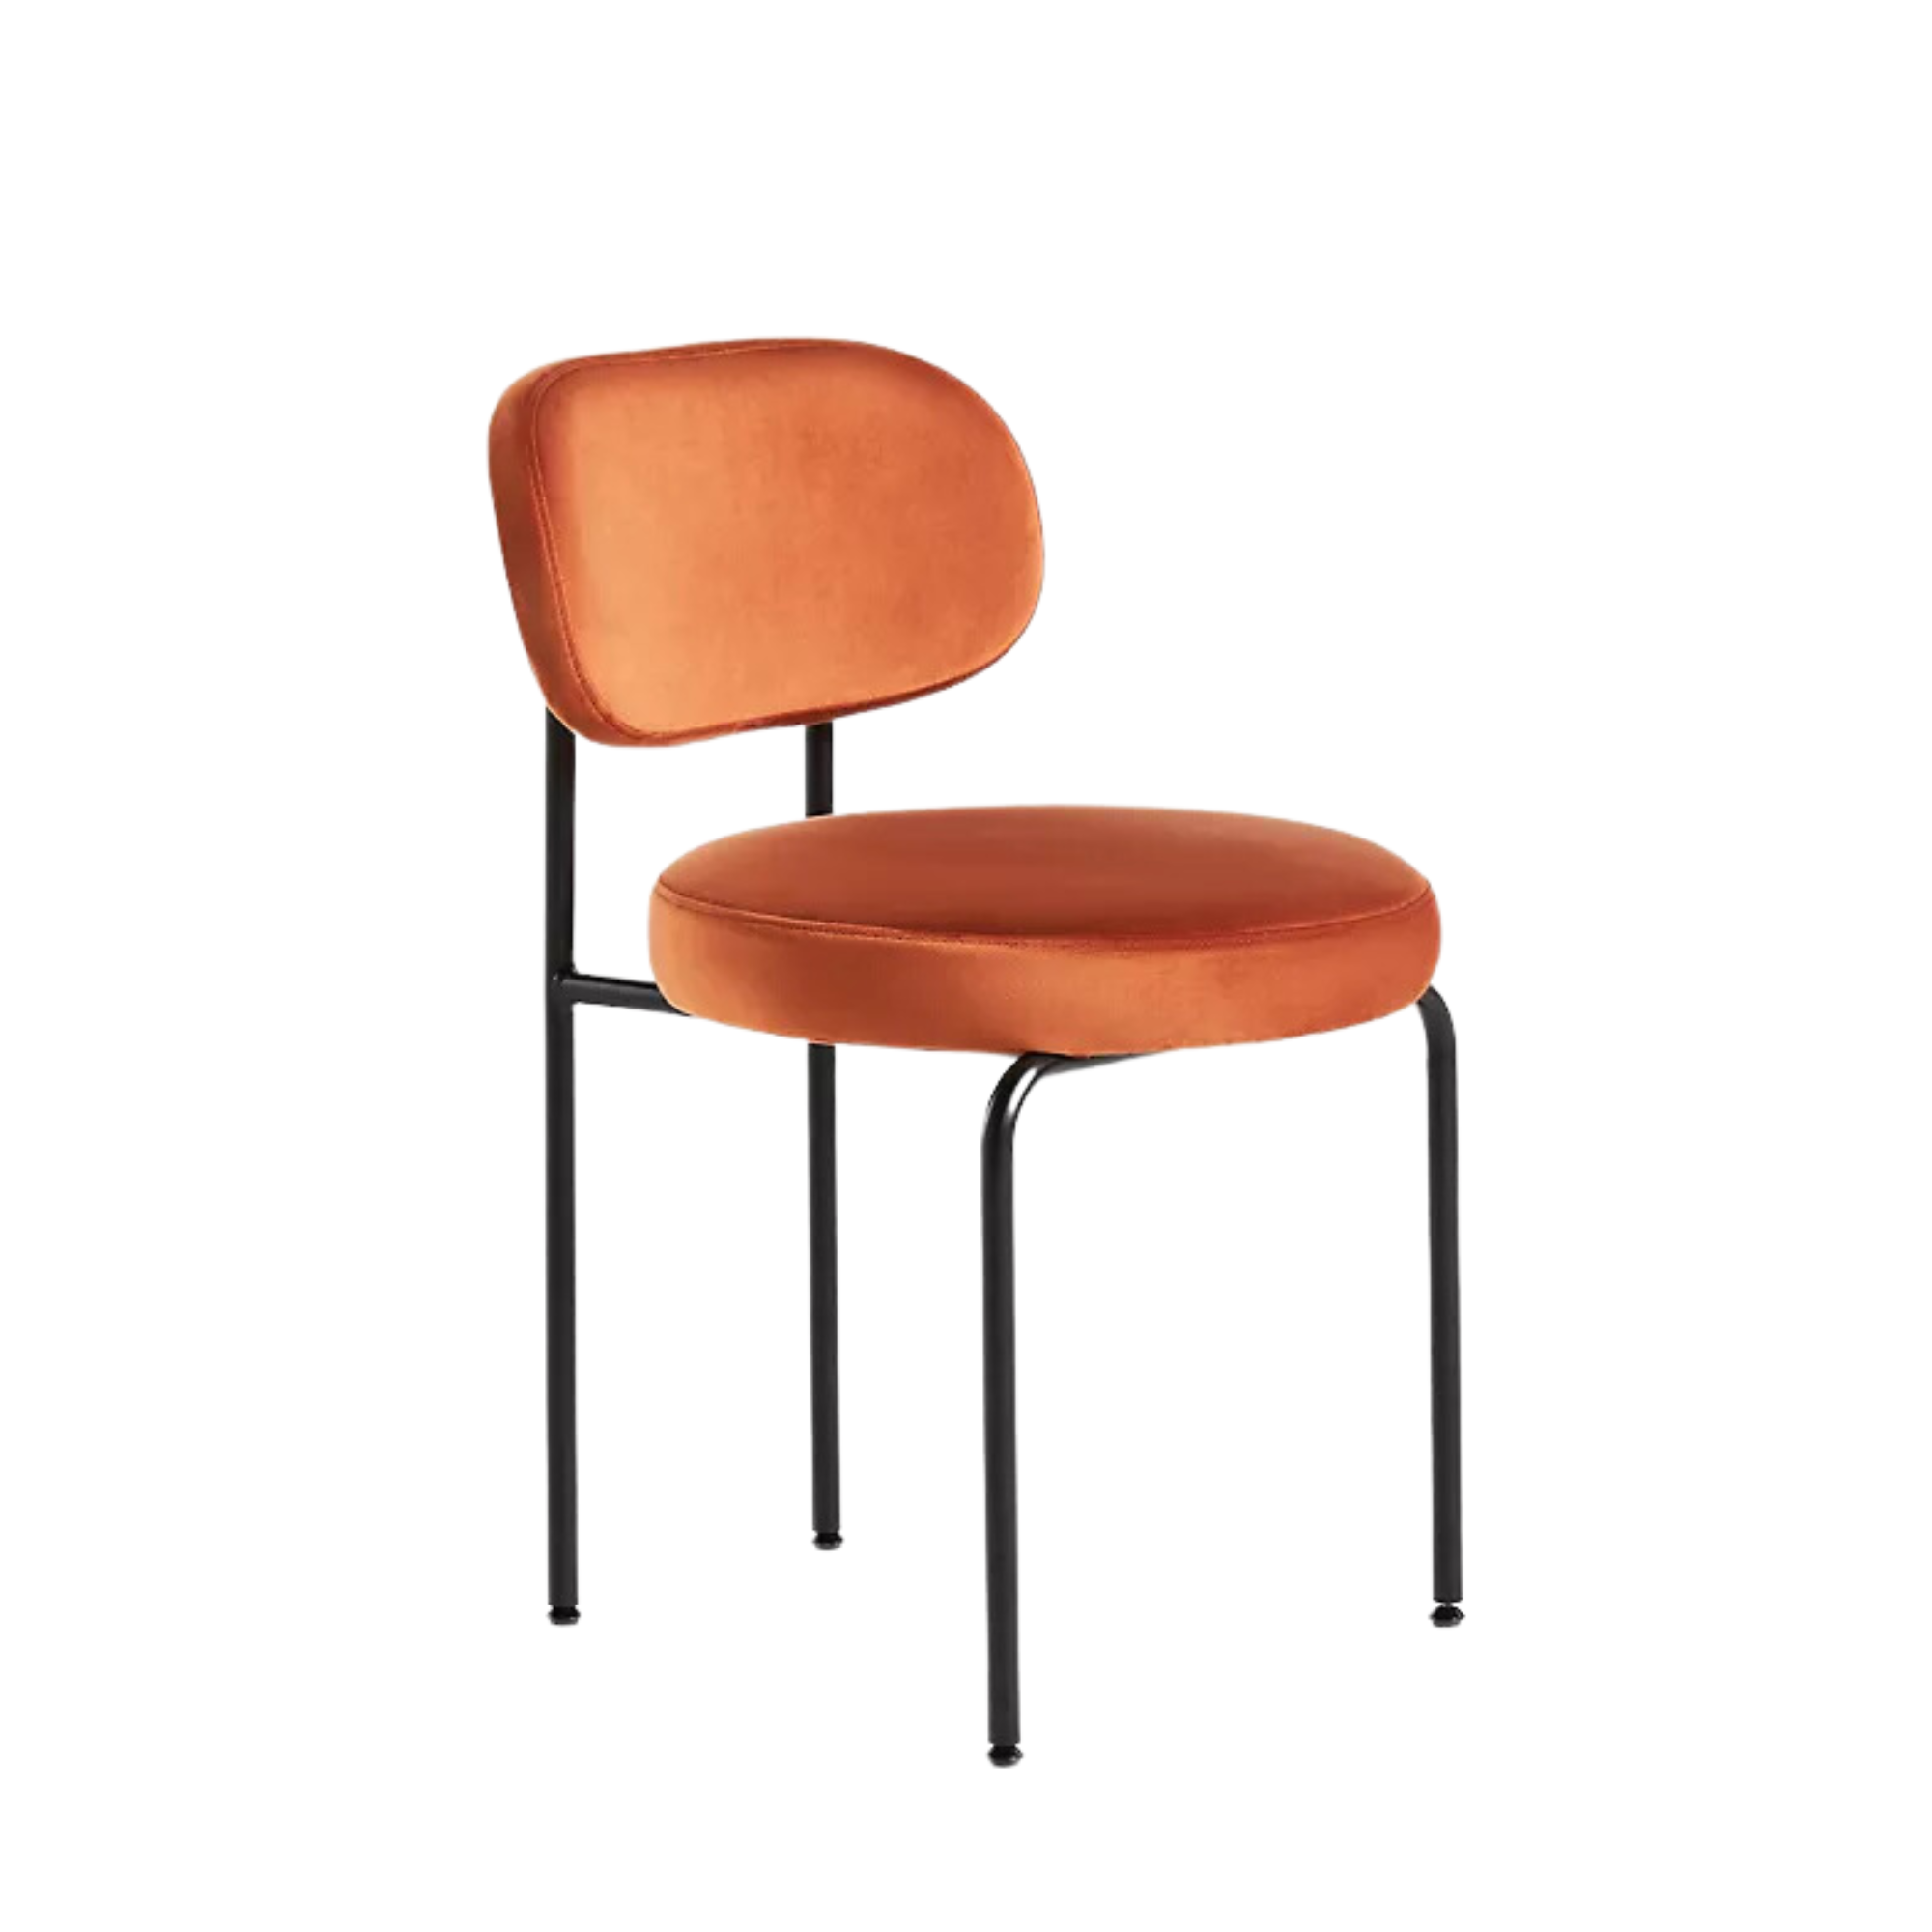 A rusty orange velvet chair